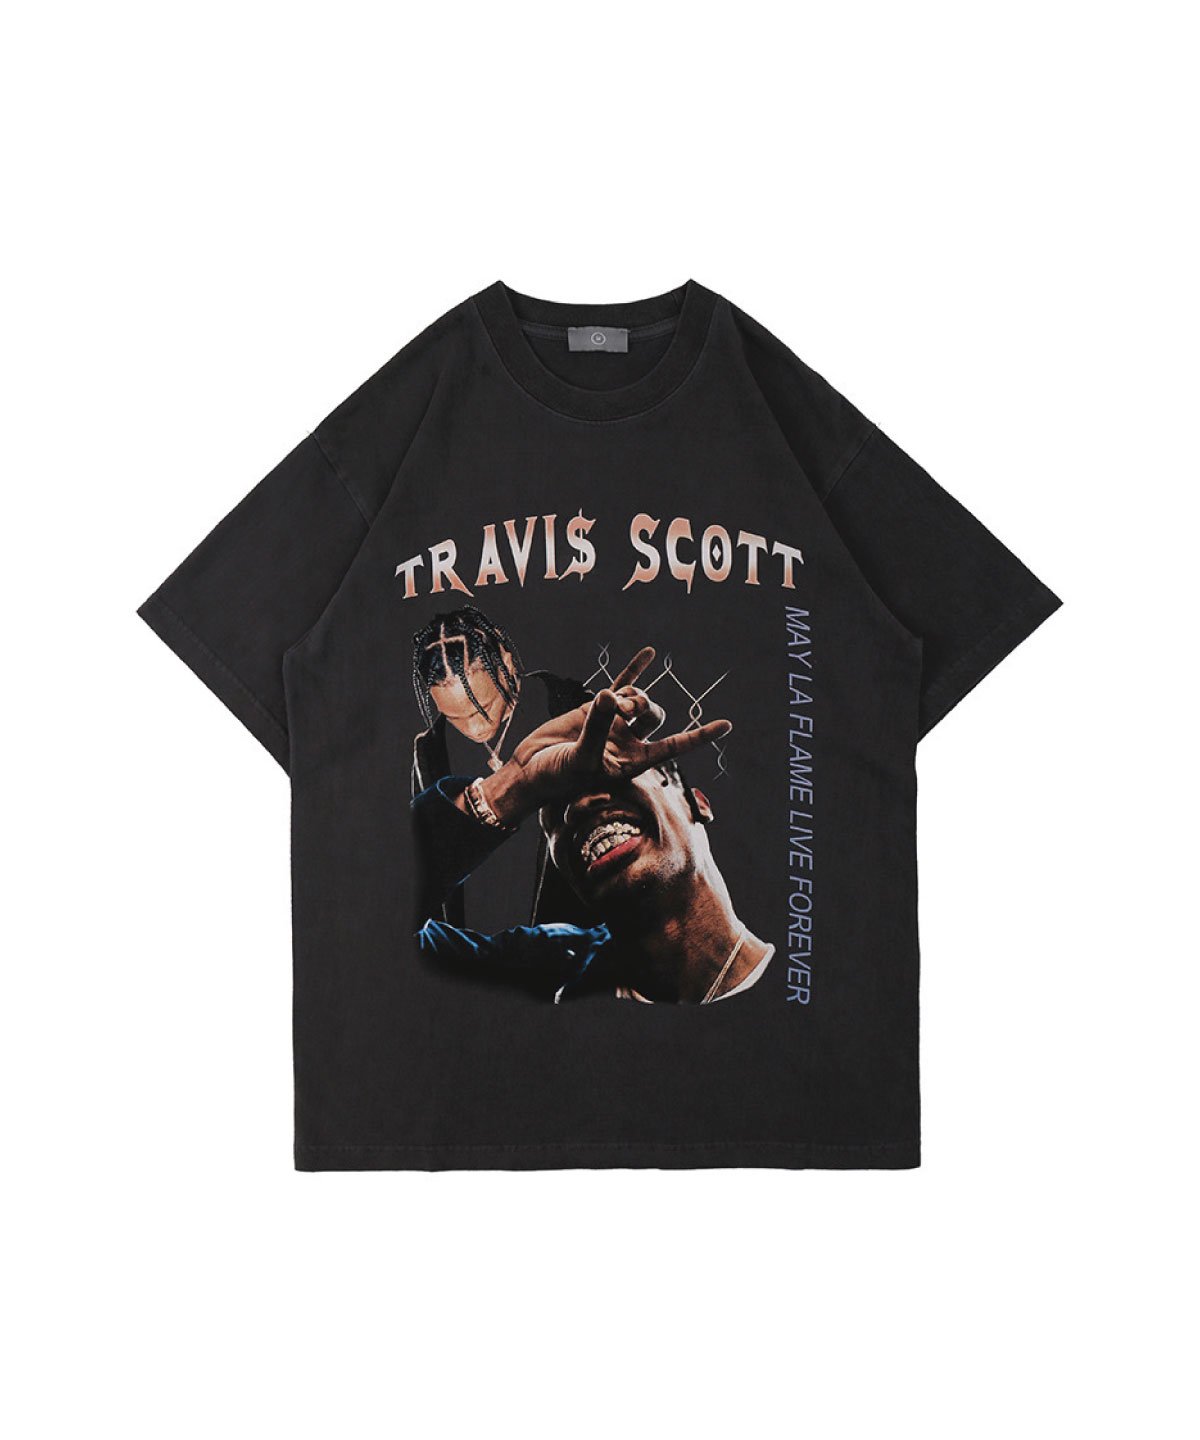 USA Select】 Travis Scott OVERSIZE Vintage T-Shirts.2